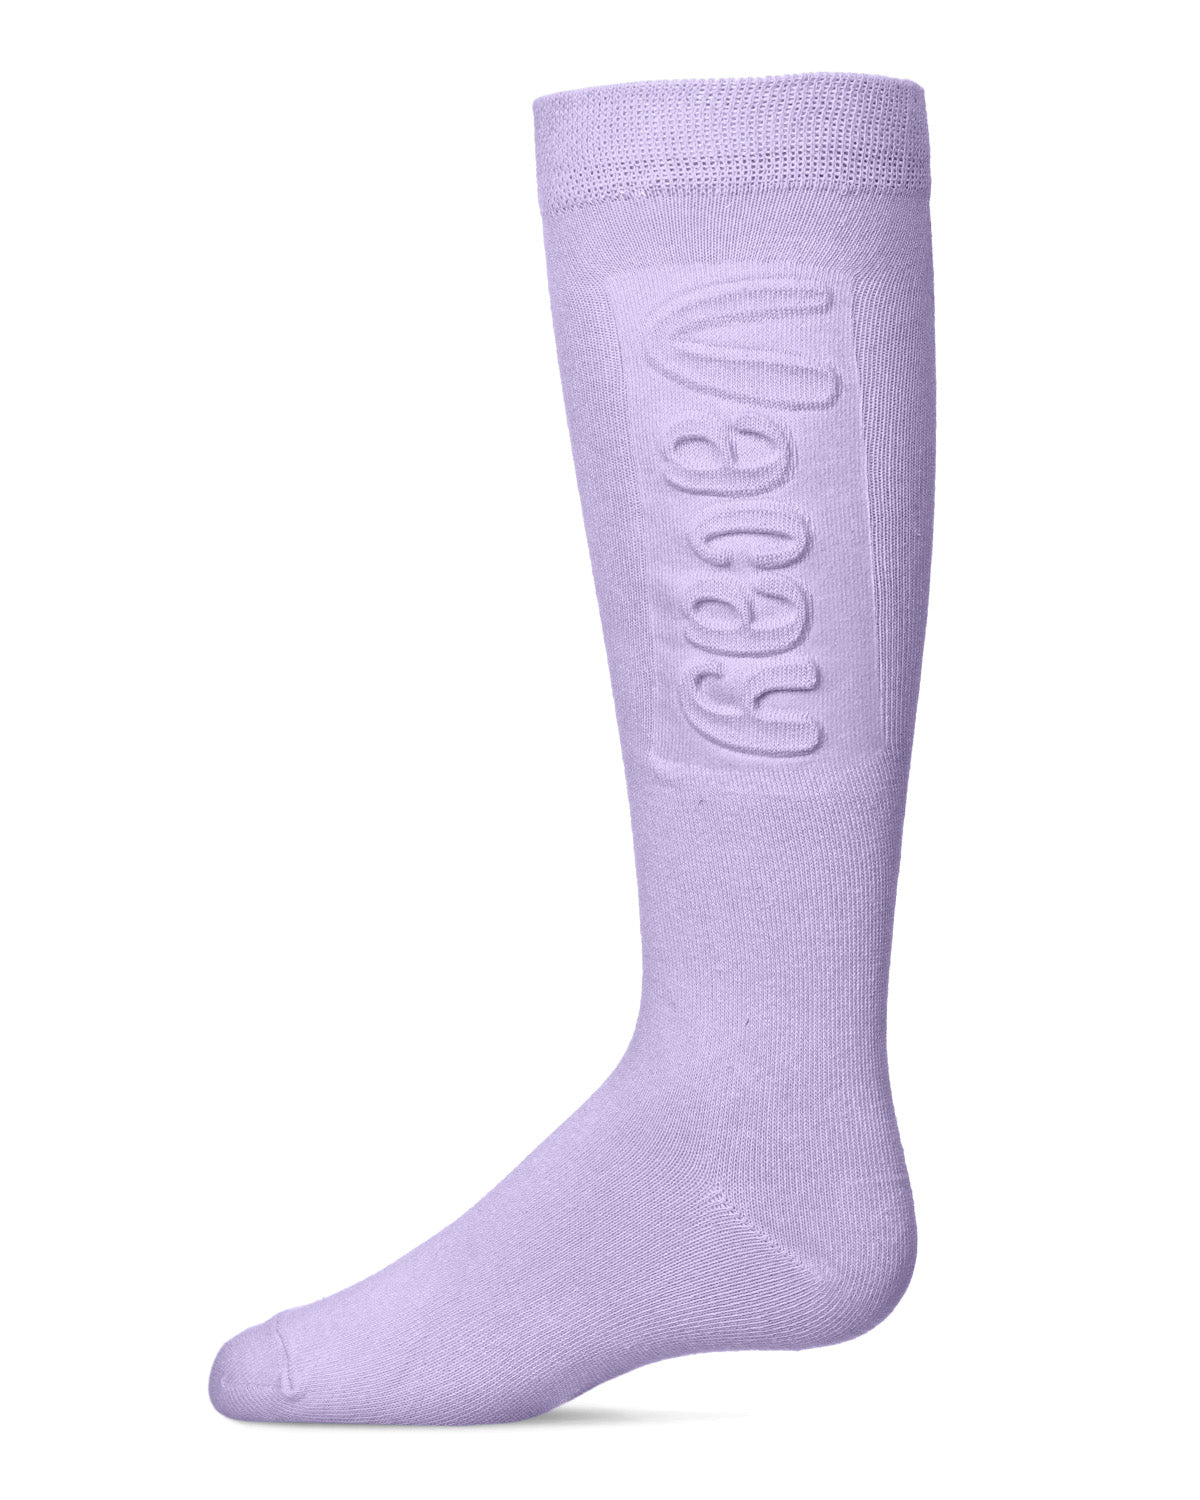 Girls Embossed VACAY Cotton Blend Knee High Socks